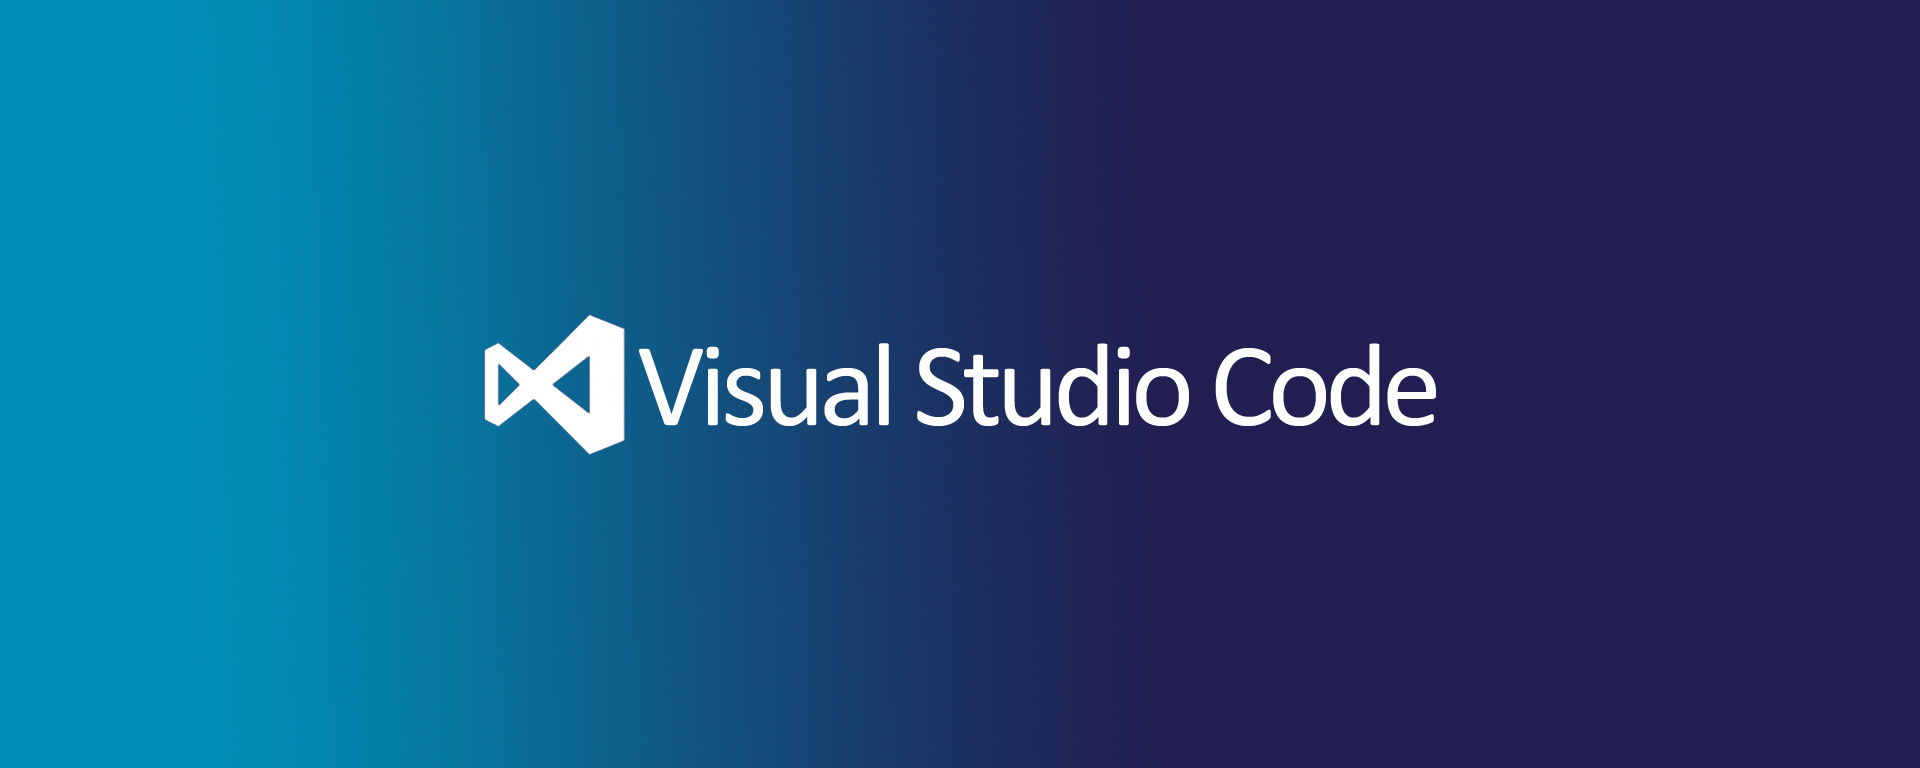 microsoft visual studio code vs visual studio